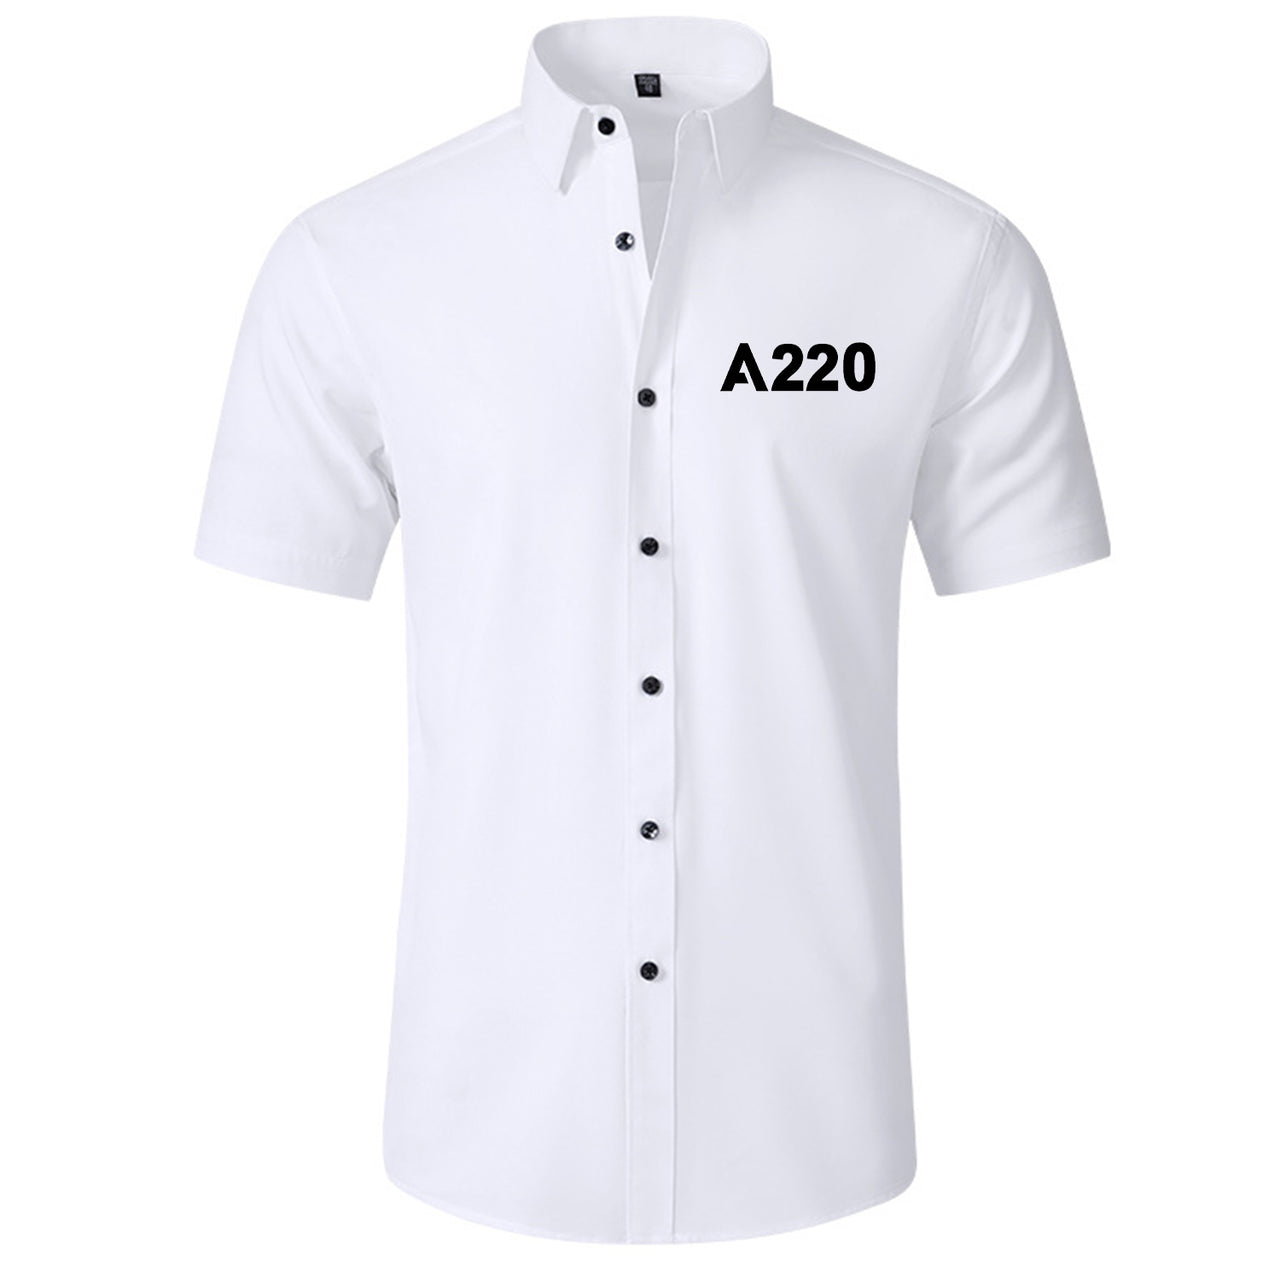 A220 Flat Text Designed Short Sleeve Shirts